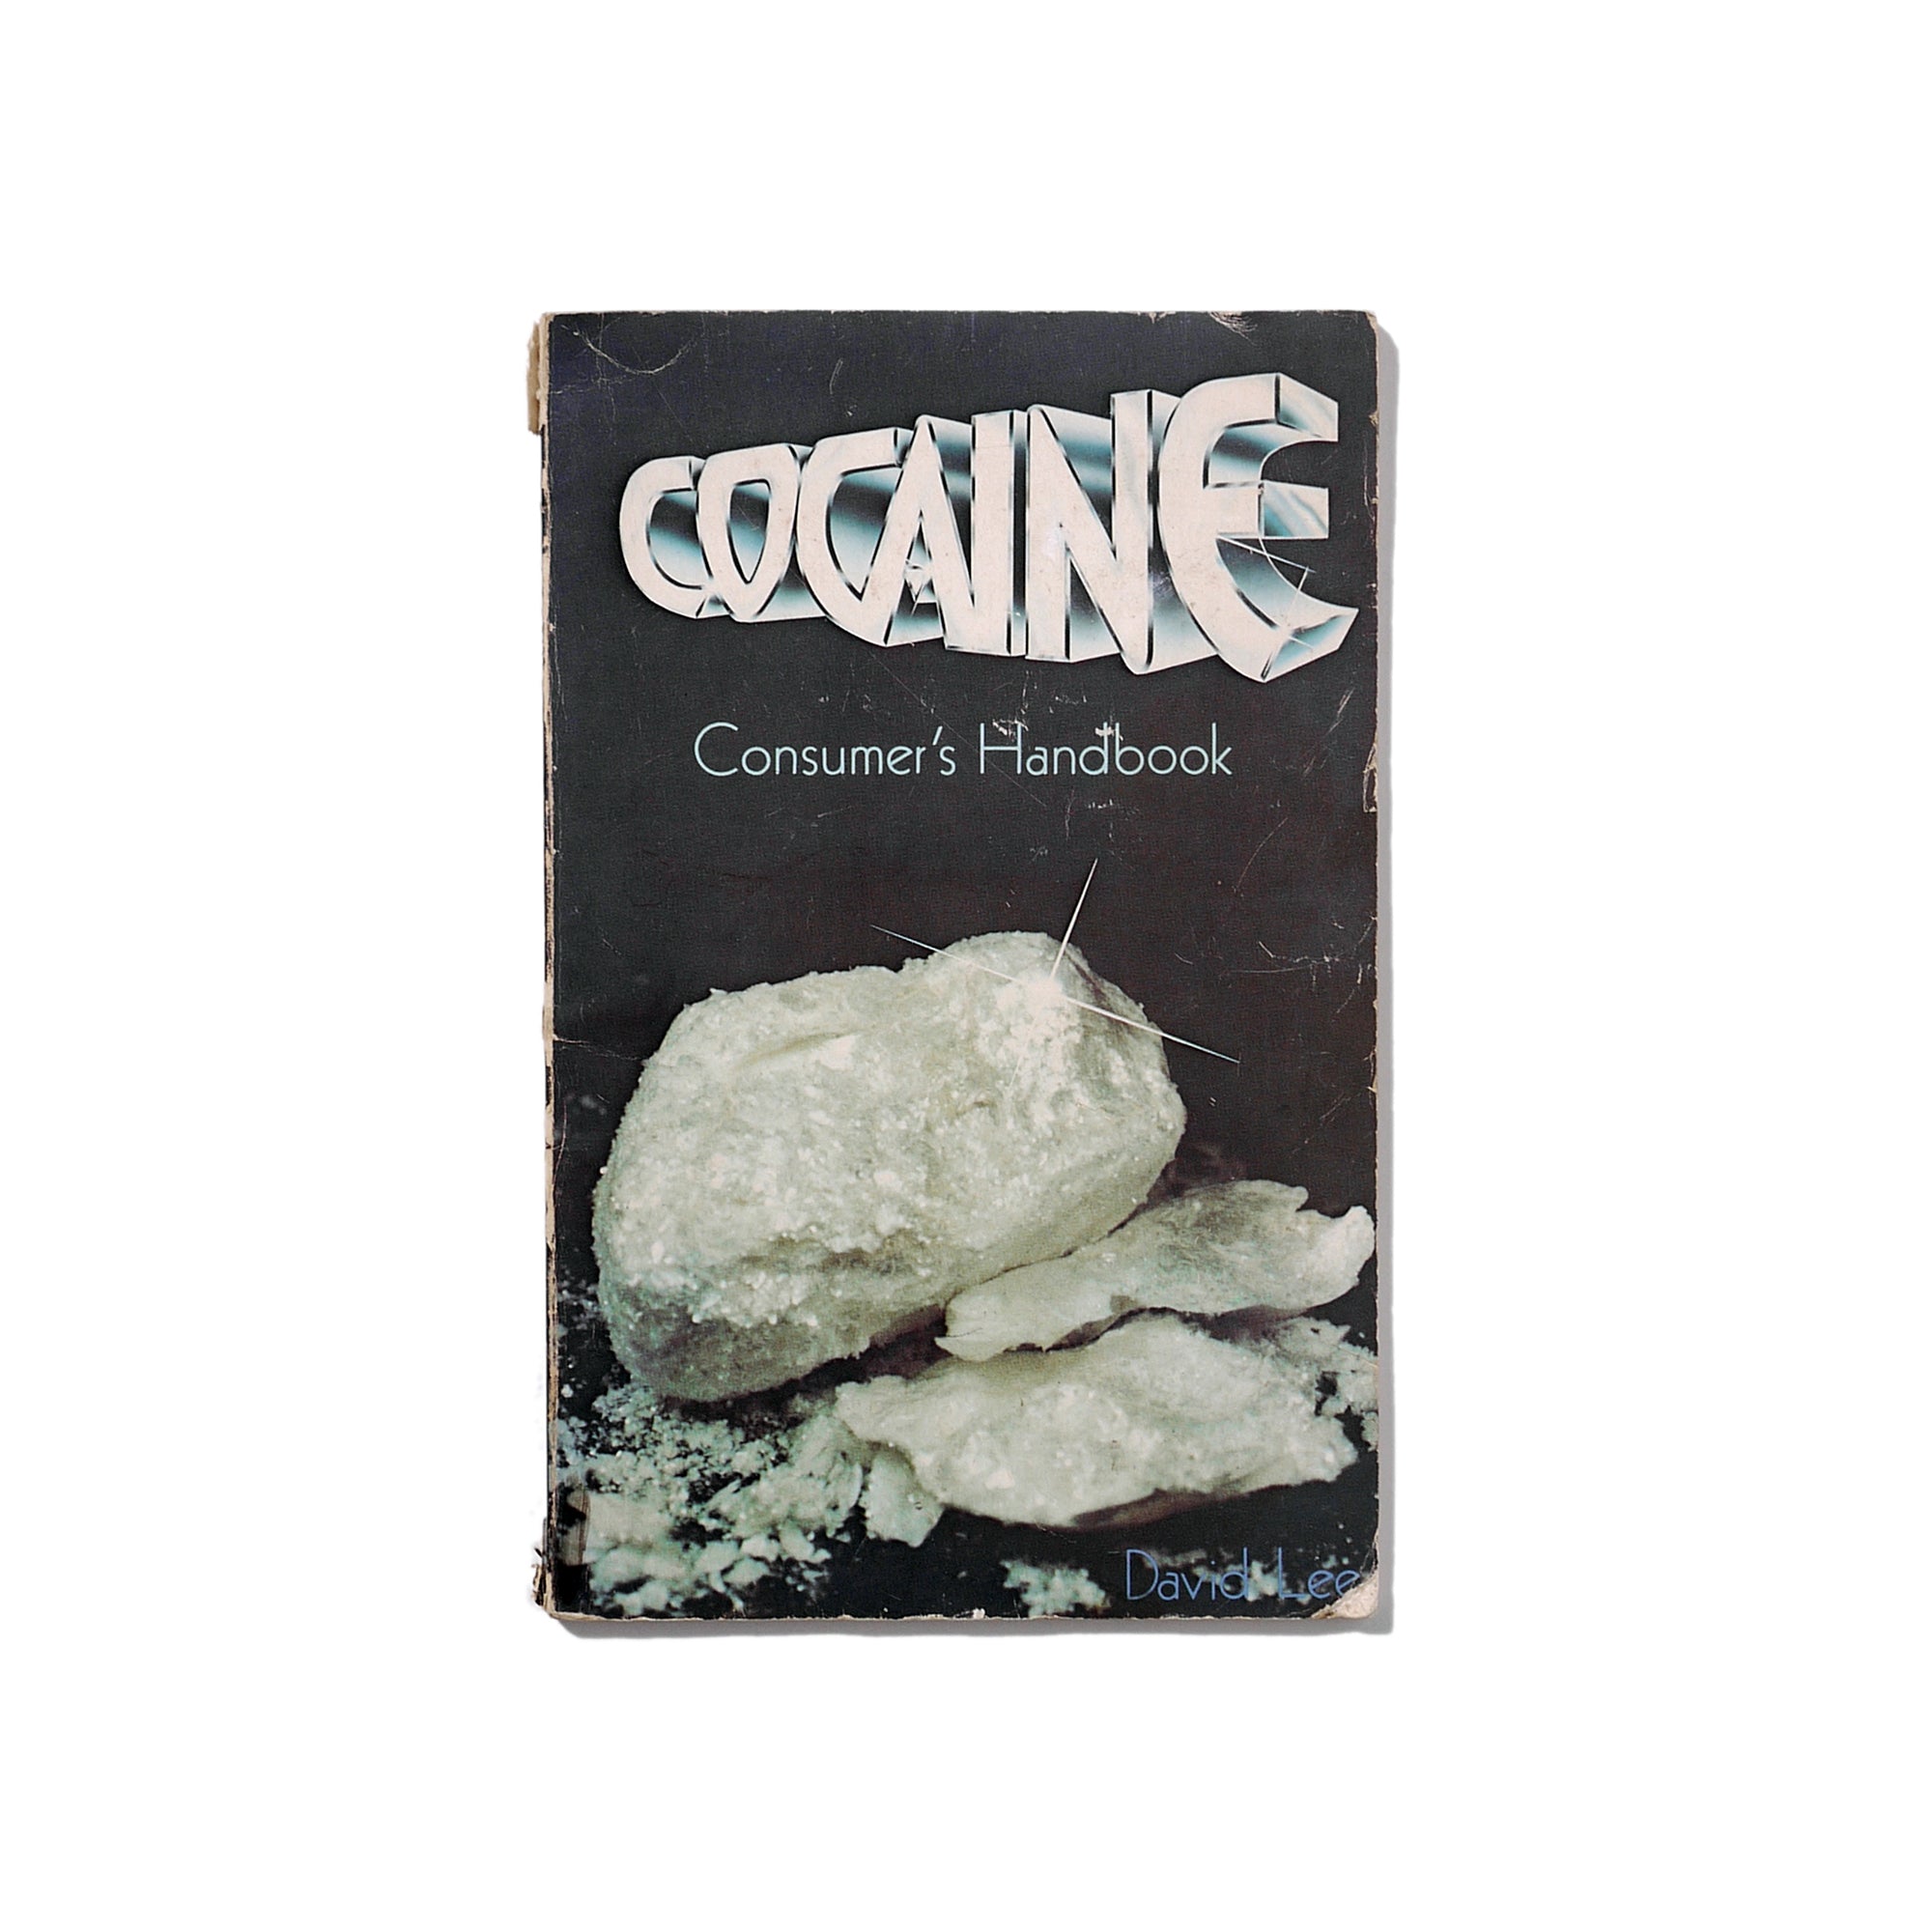 COCAINE CONSUMER'S HANDBOOK